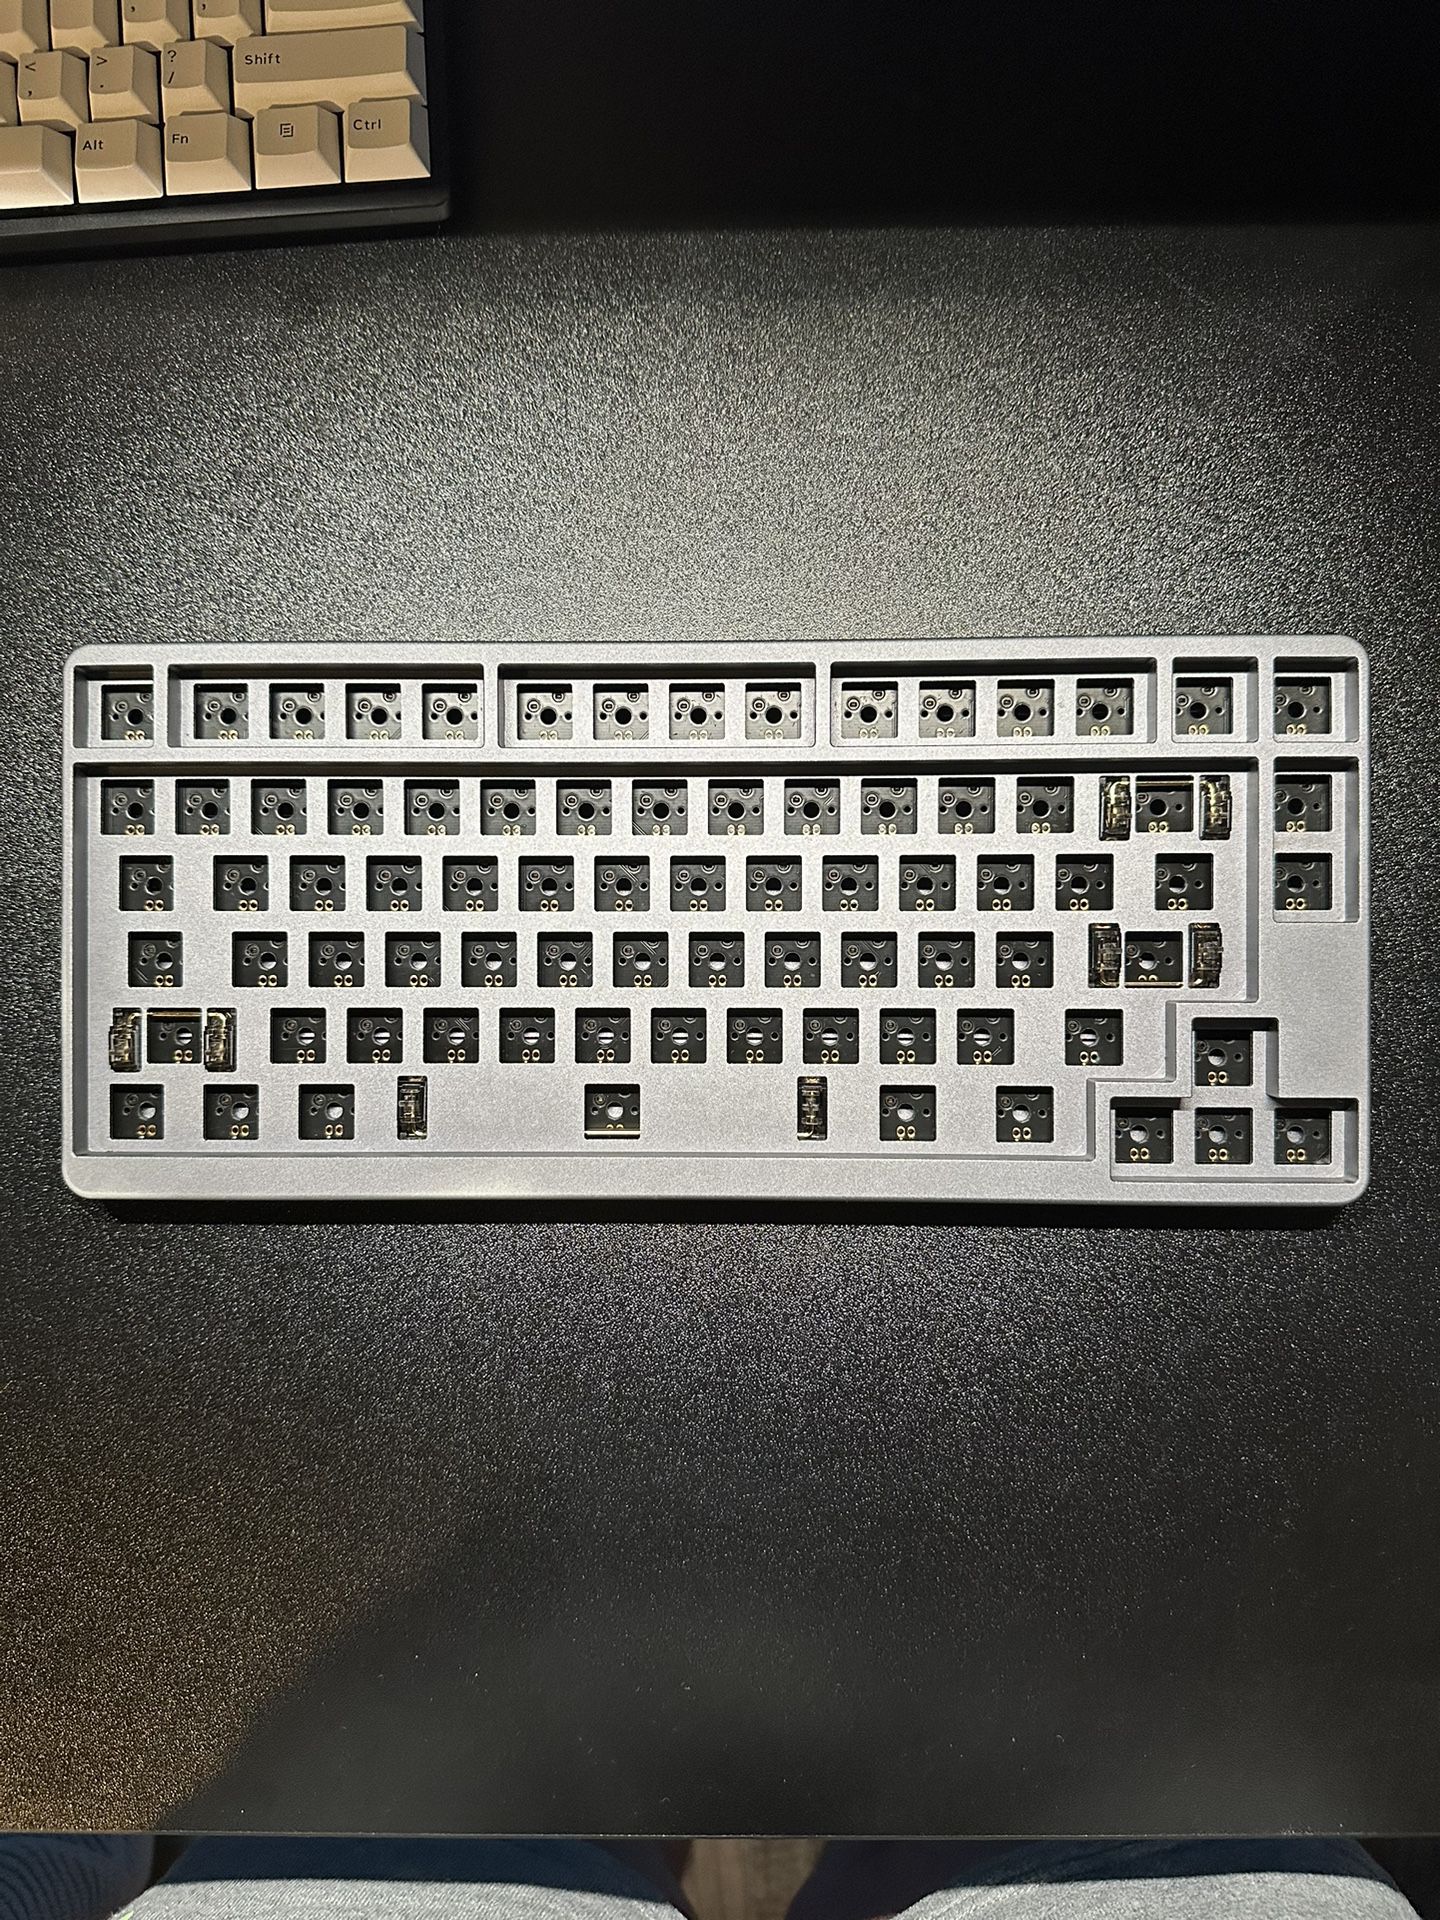 Barebones Id80 Custom keyboard